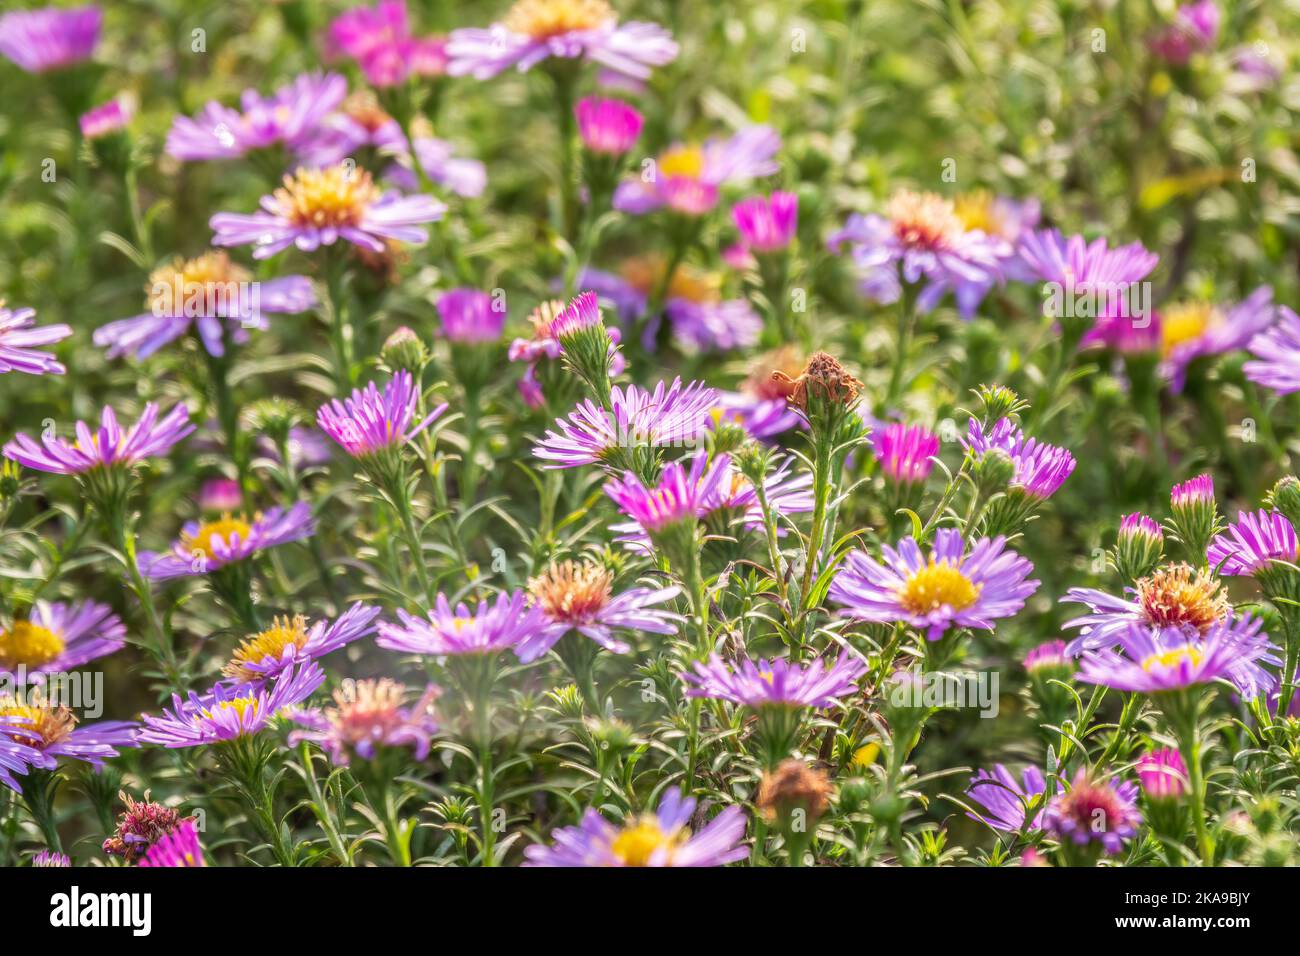 Aster Amellus, Purple Daisy. Daisies - Spring Time Flowers. Closeup of purple Michaelmas daisy flowers, Aster amellus Rudolf goethe, in a garden. Beau Stock Photo